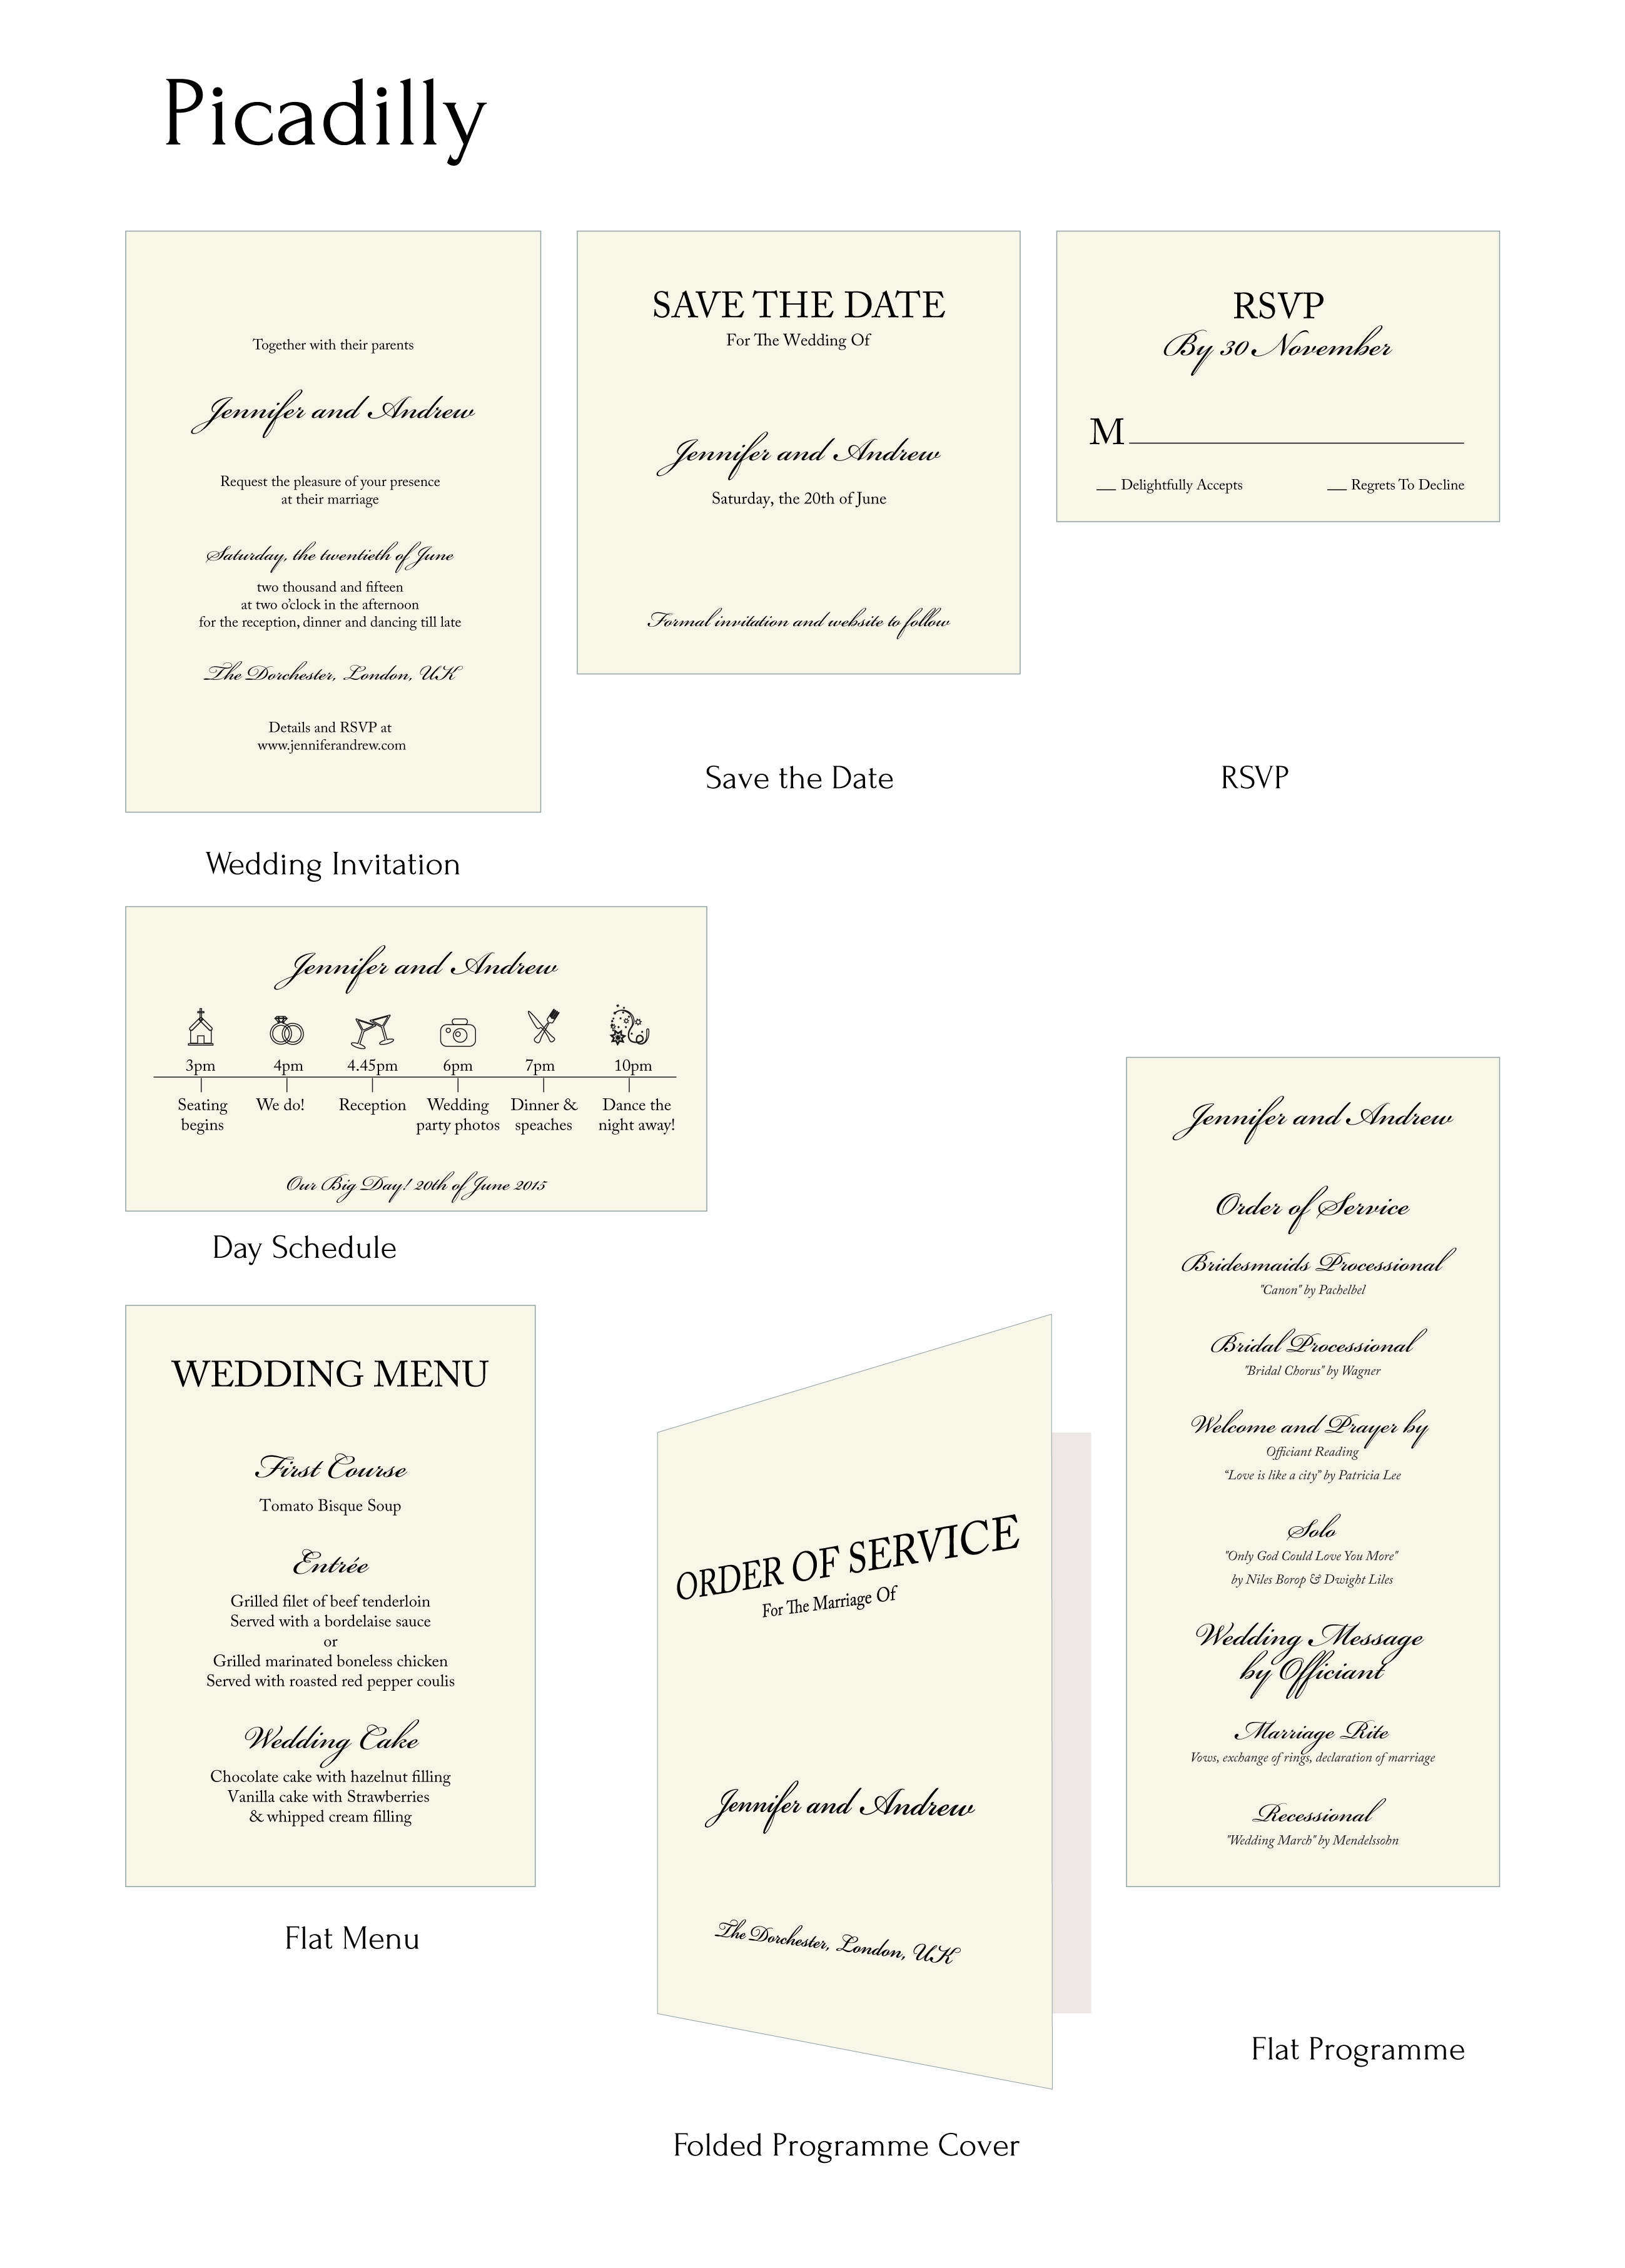 Classic wedding invitation-Picadilly 06